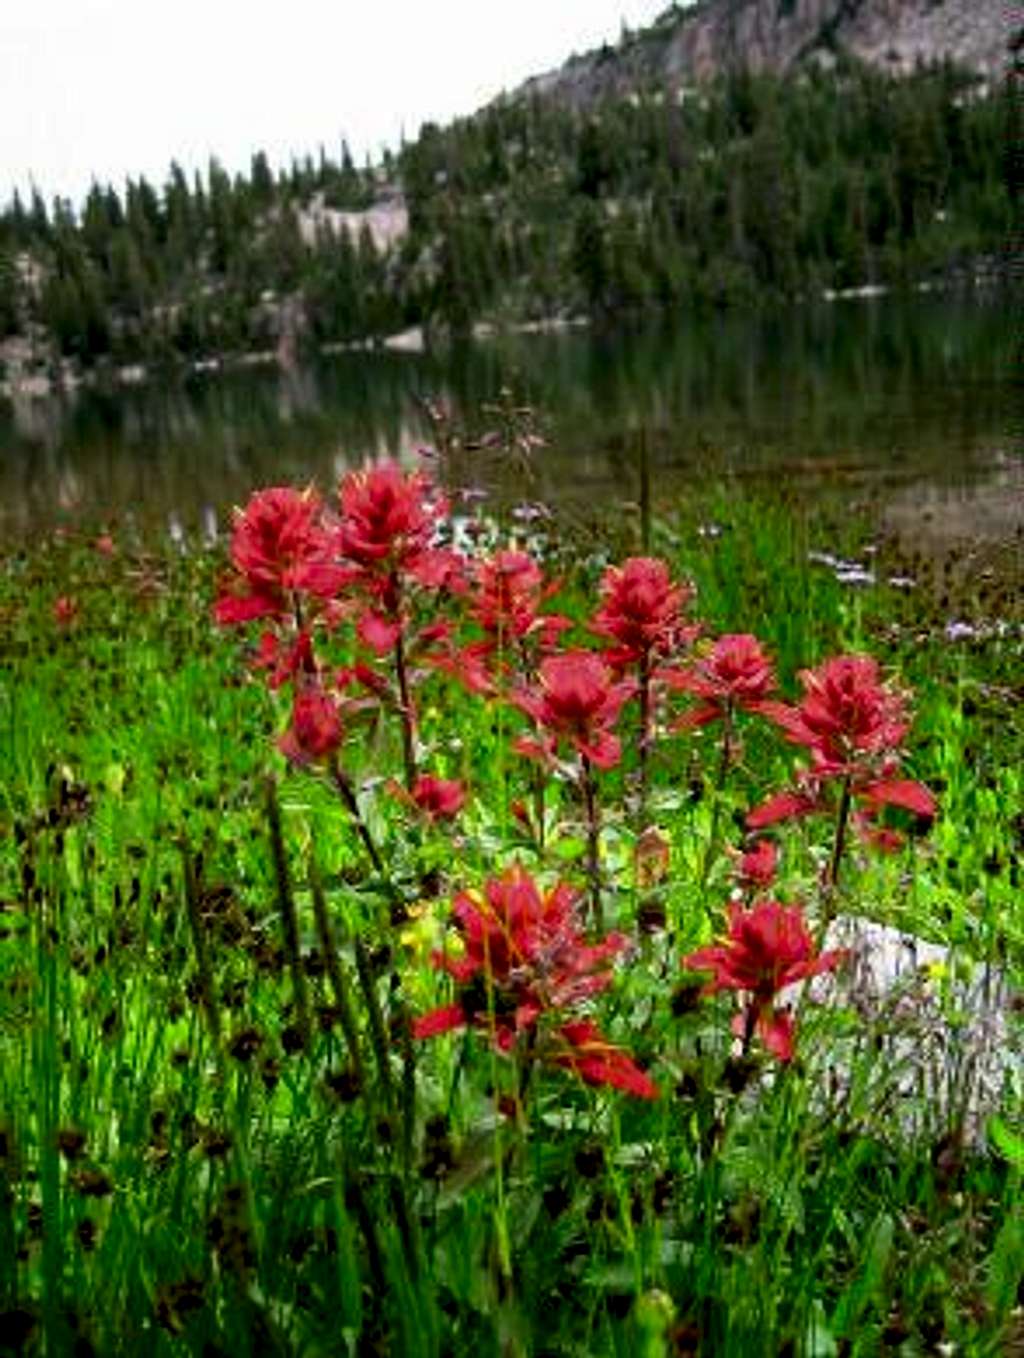 Kamas Lake and wildflowers....